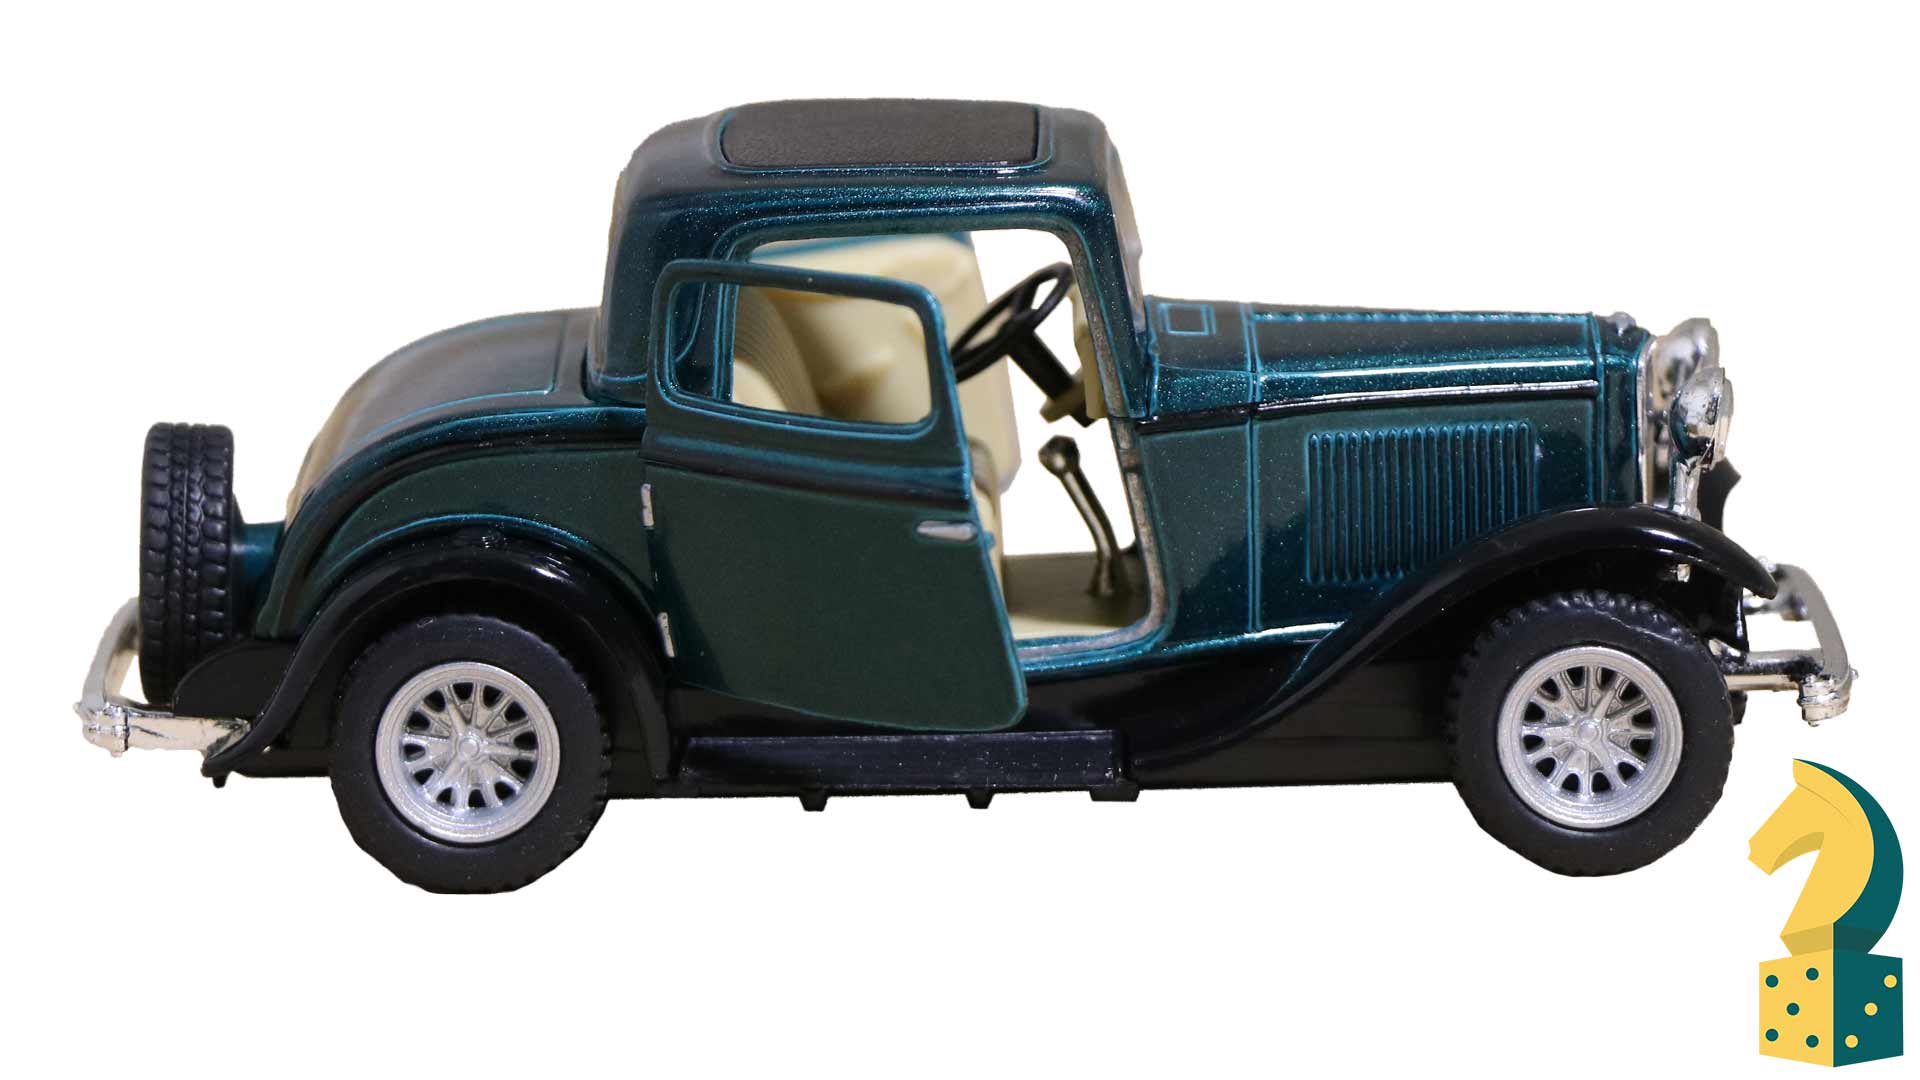 ماکت ماشین ماشین فورد 1932 سه پنجره کوپه - سبز